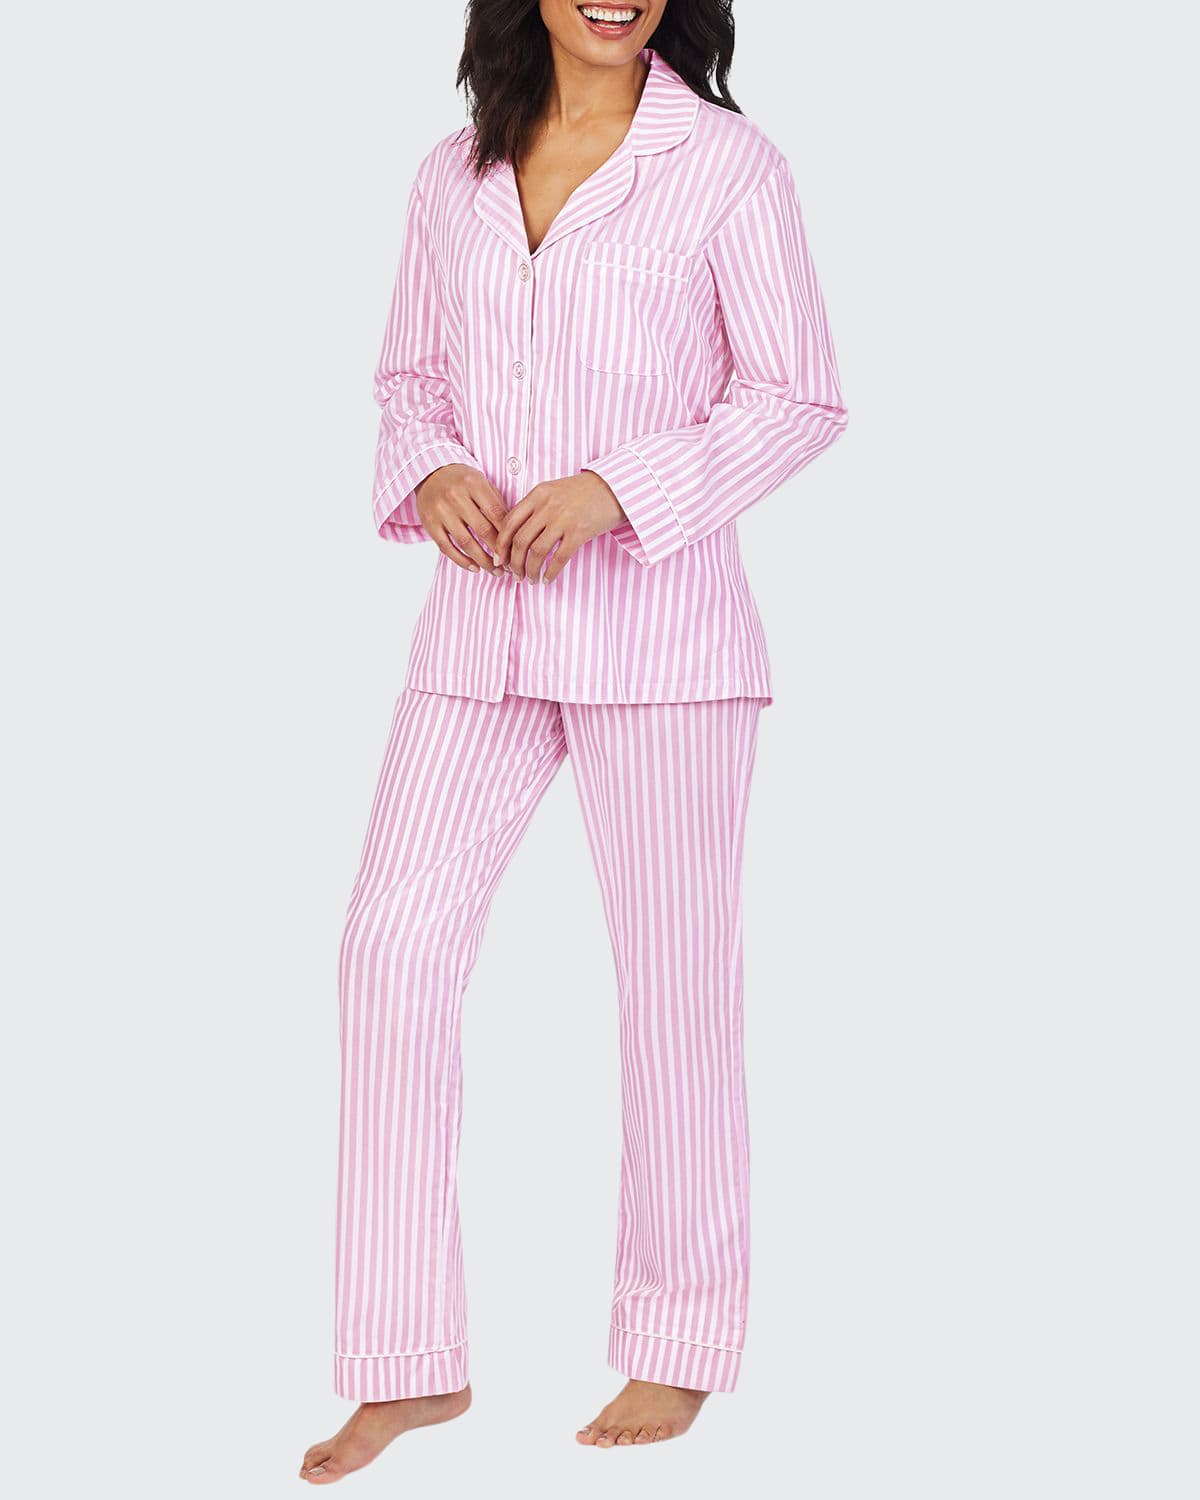 BedHead Pajamas 3D Striped Cotton Long-Sleeve Classic Pajama Set